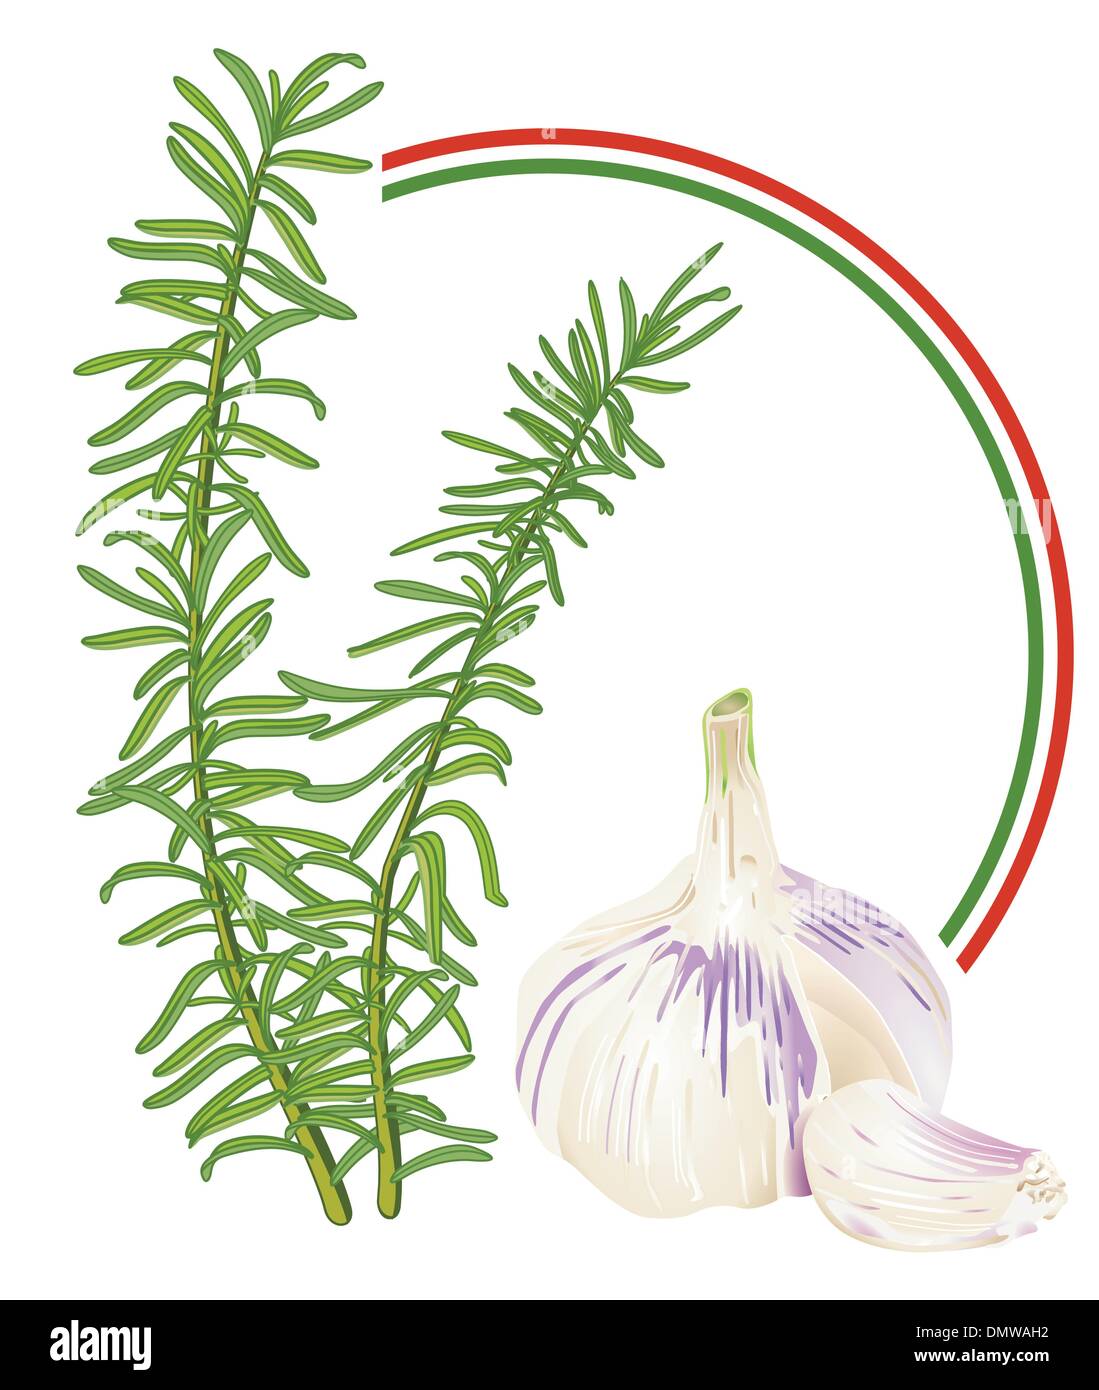 Rosemary and Garlic Stock Vector